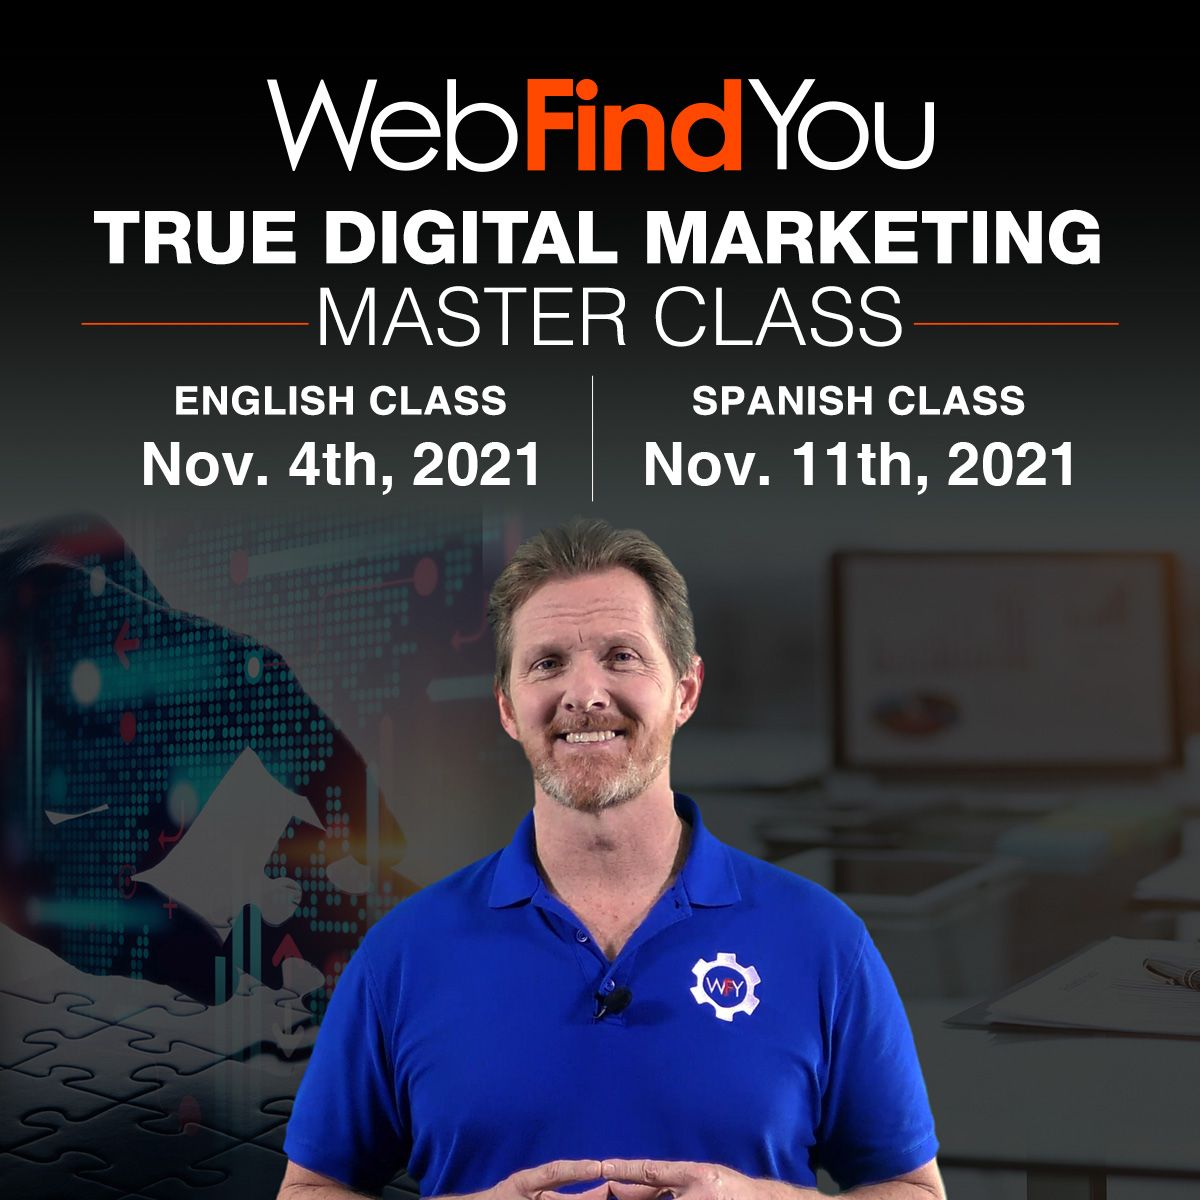 WebFindYou True Digital Marketing Master Class